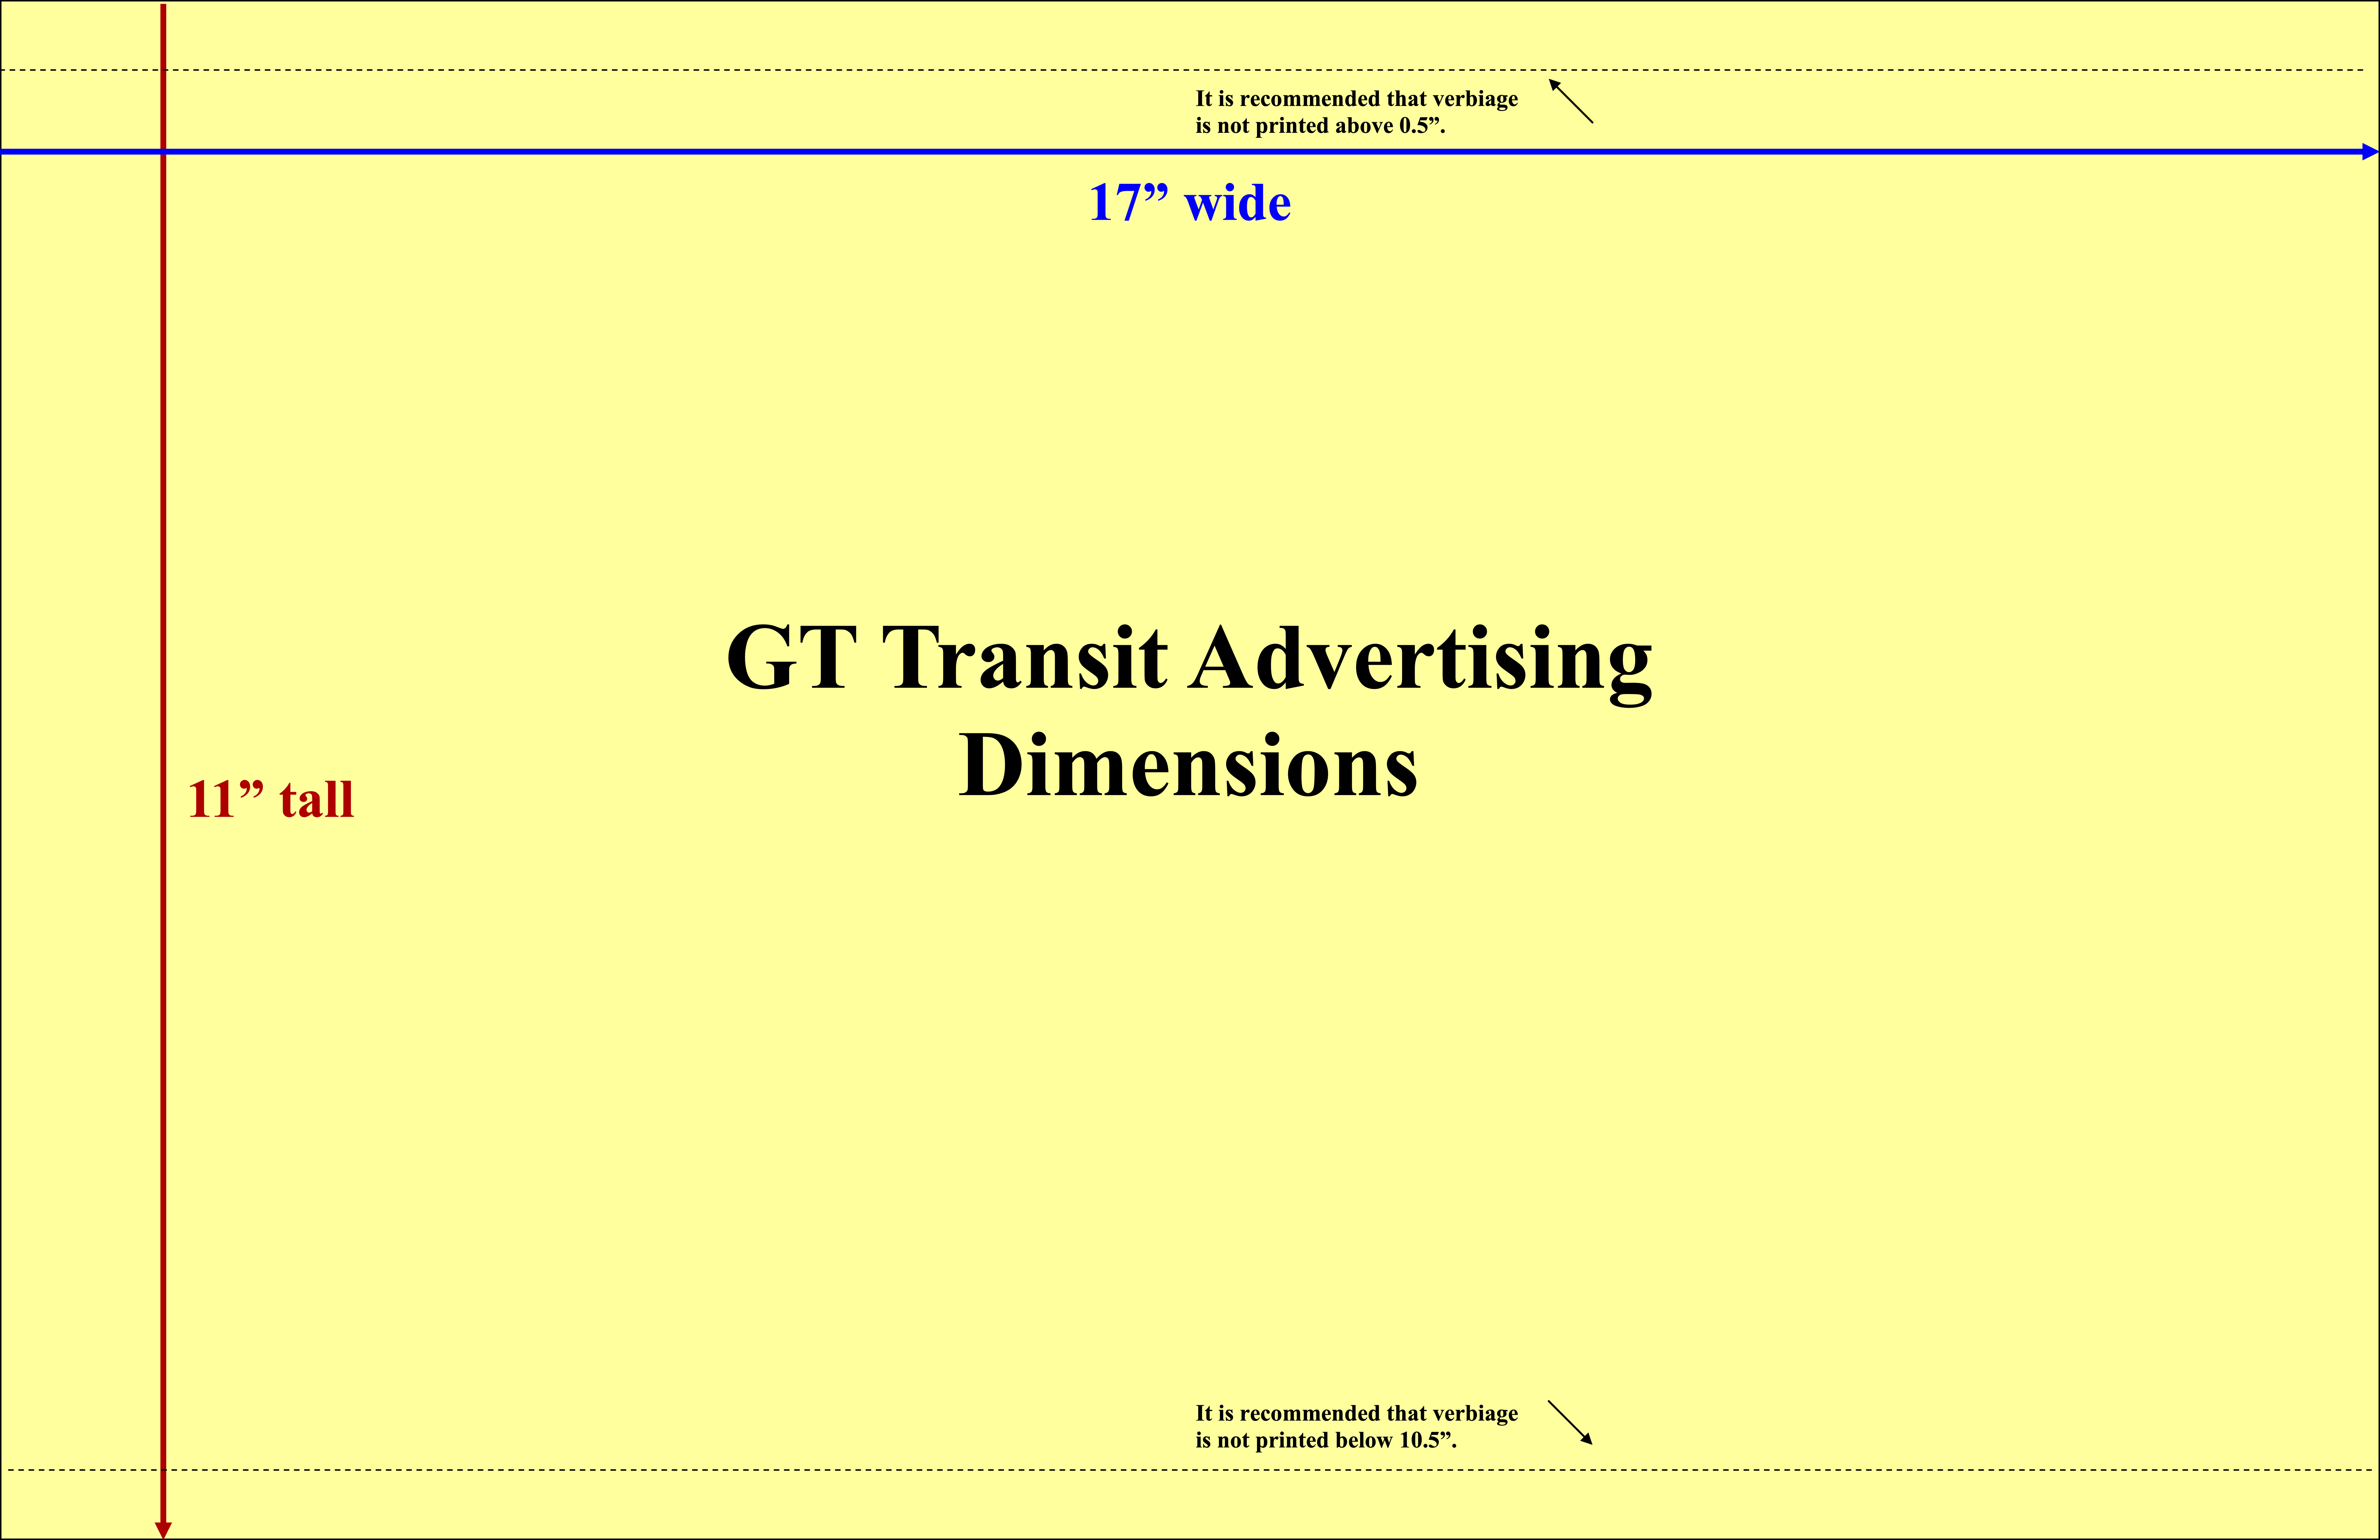 PTS Transit Advertising Dimensions